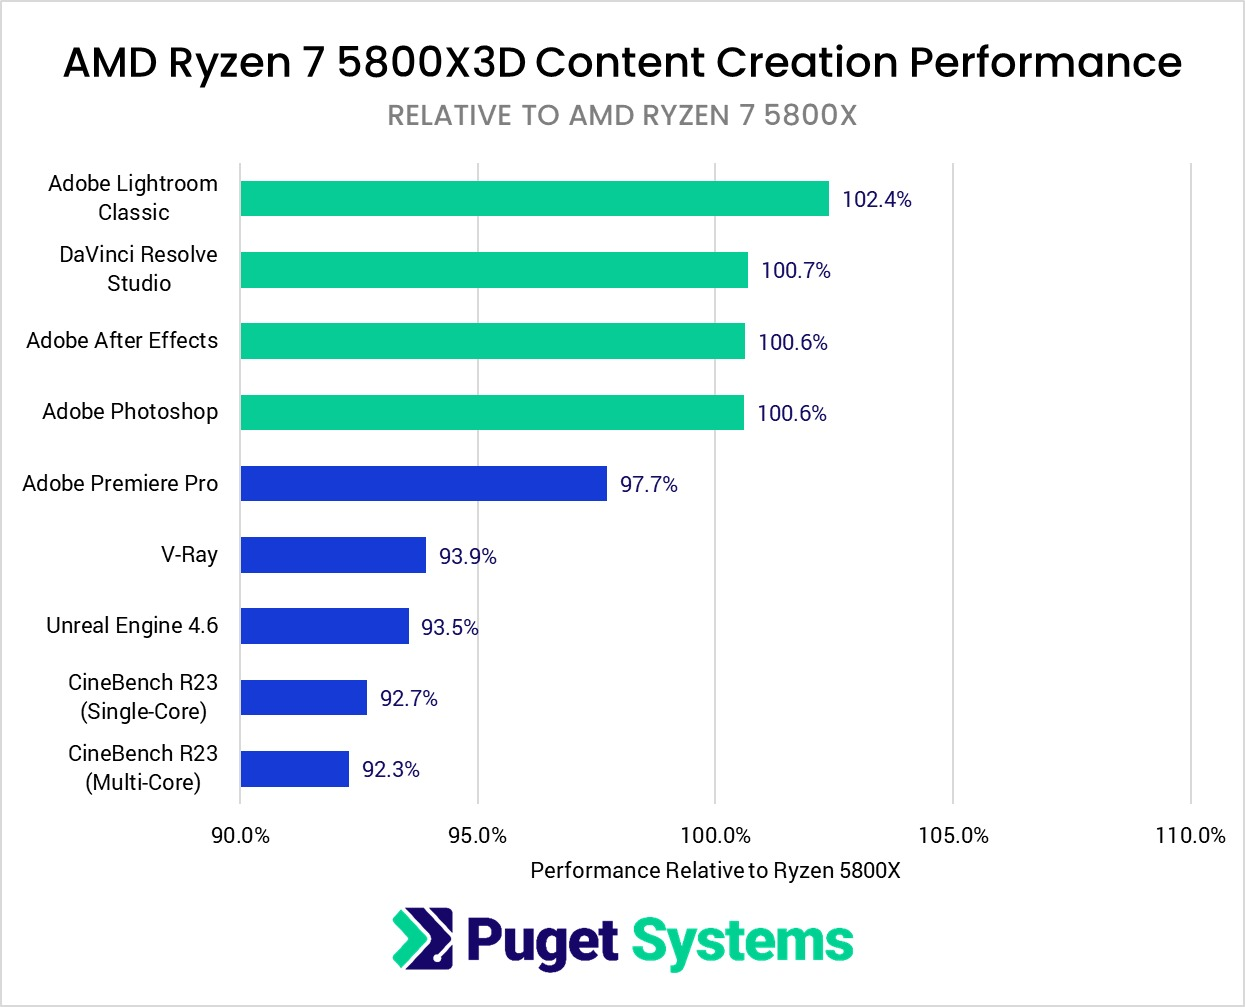 AMD Ryzen 7 5800X3D Content Creation Performance